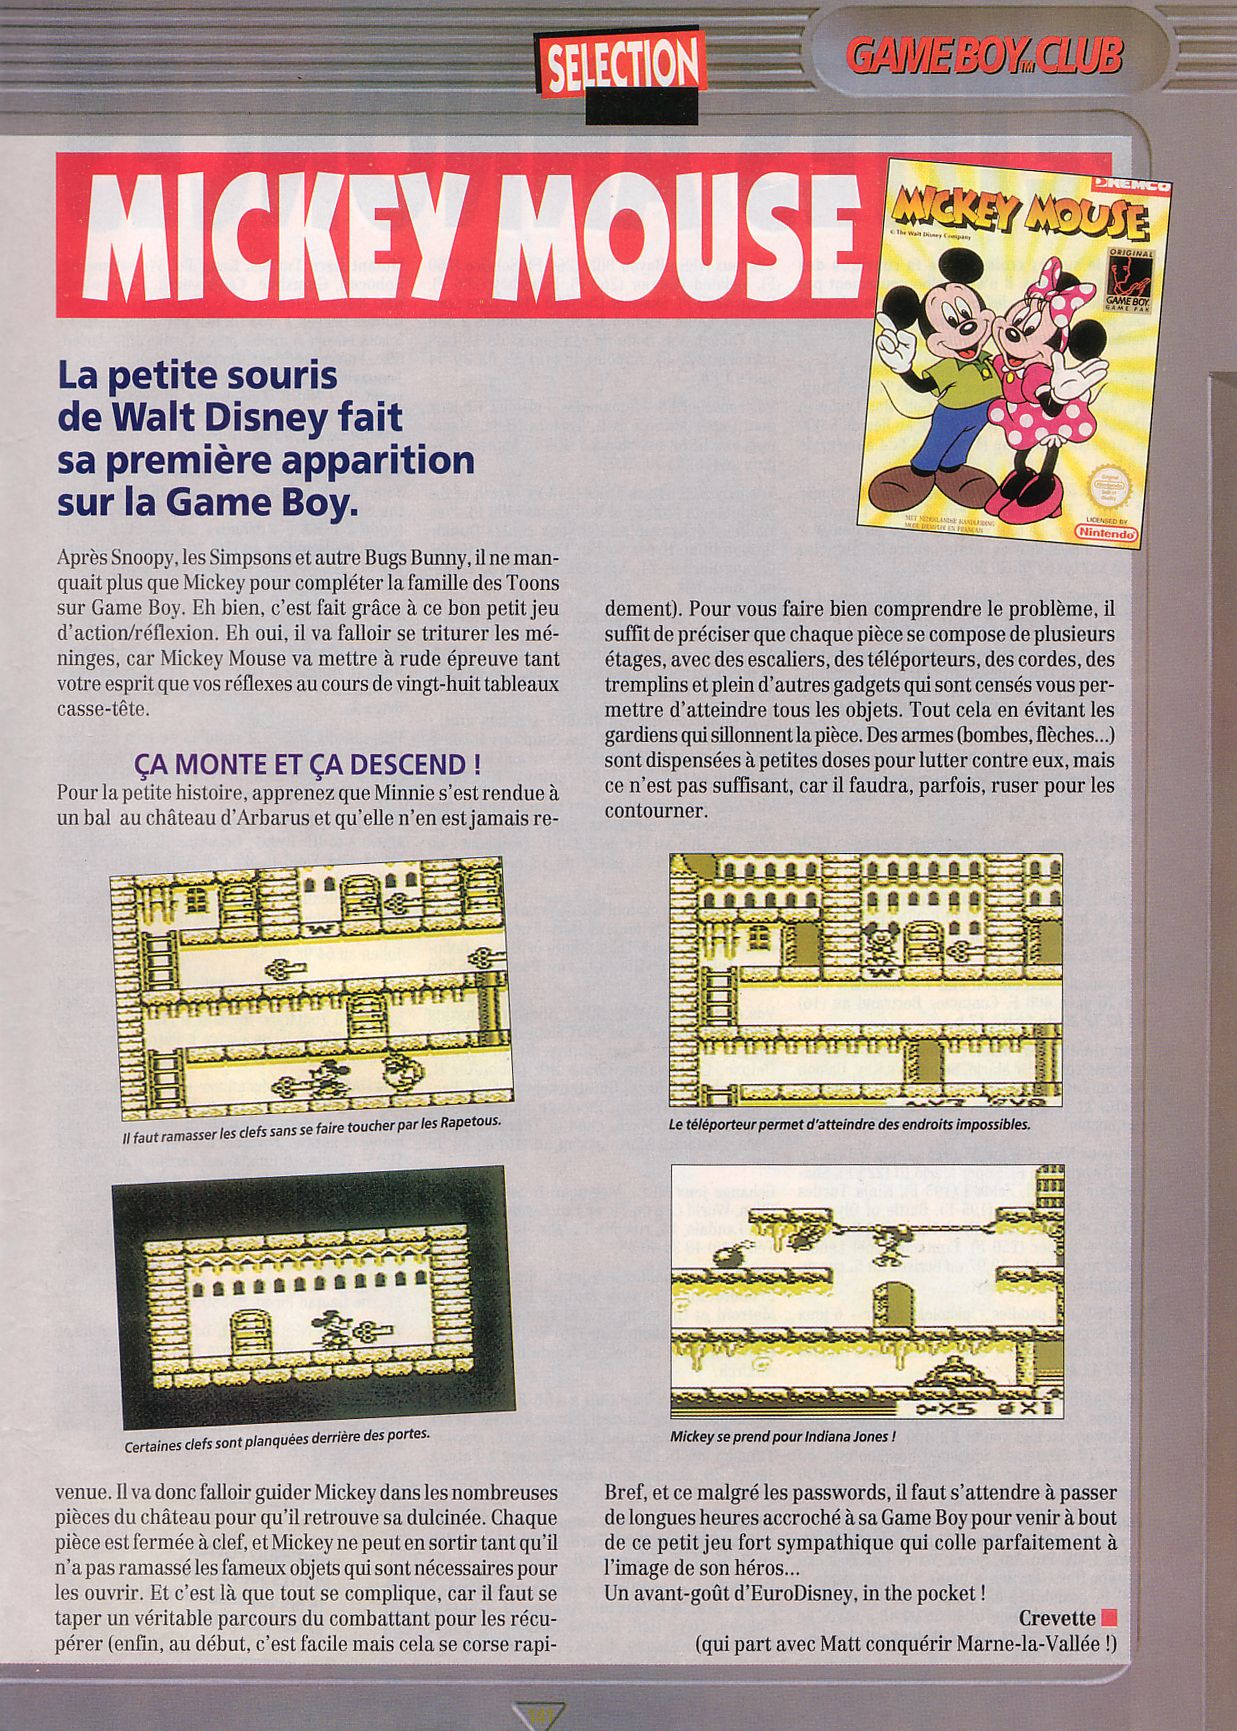 tests/987/Nintendo Player 007 - Page 141 (1992-11-12).jpg